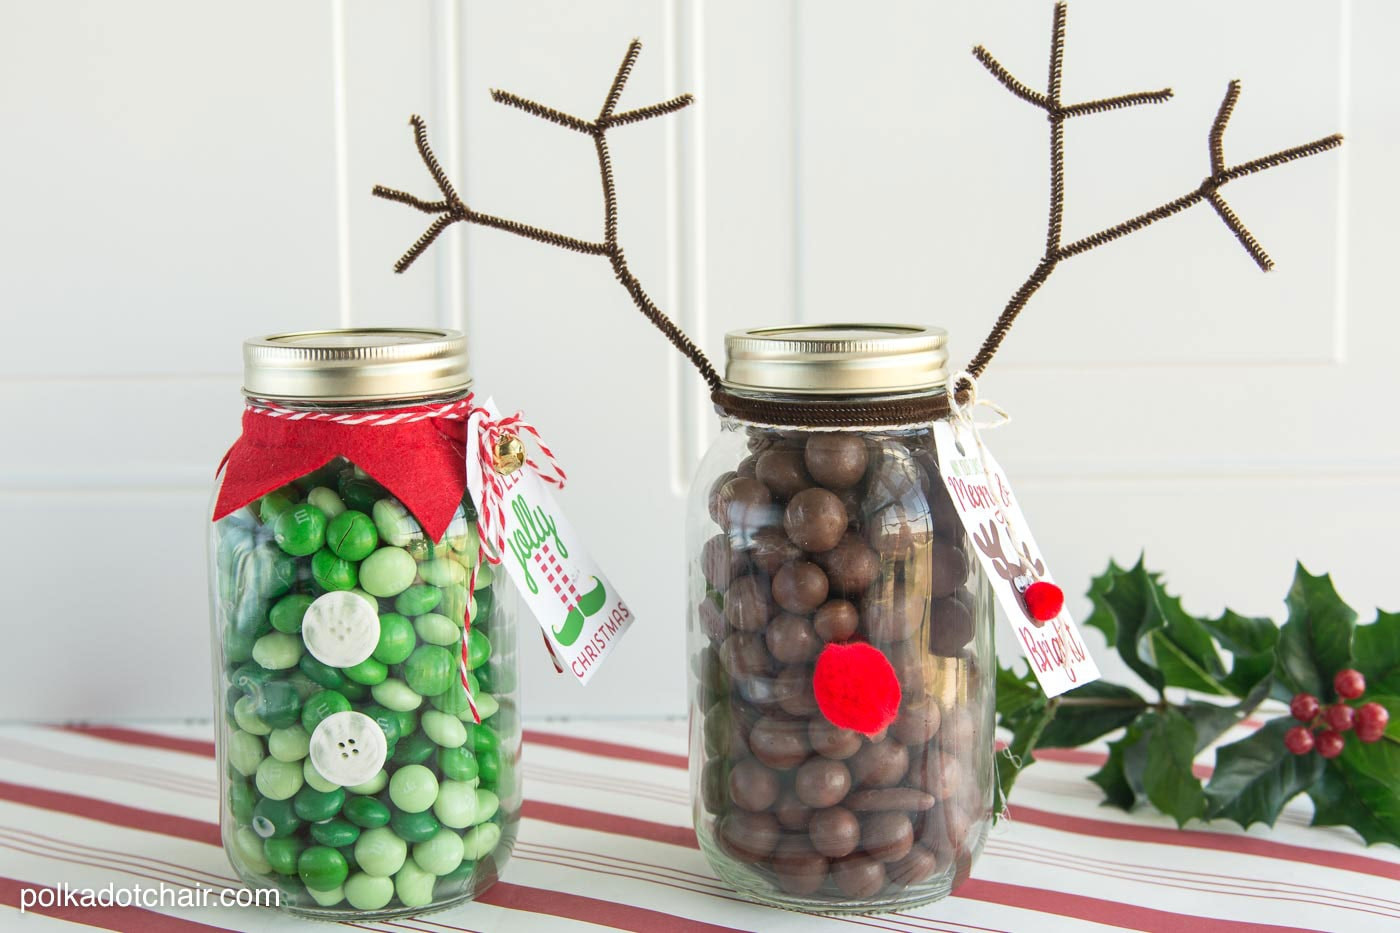 Best ideas about Mason Jar Gift Ideas For Christmas
. Save or Pin Reindeer Christmas Mason Jar Gift Idea Now.